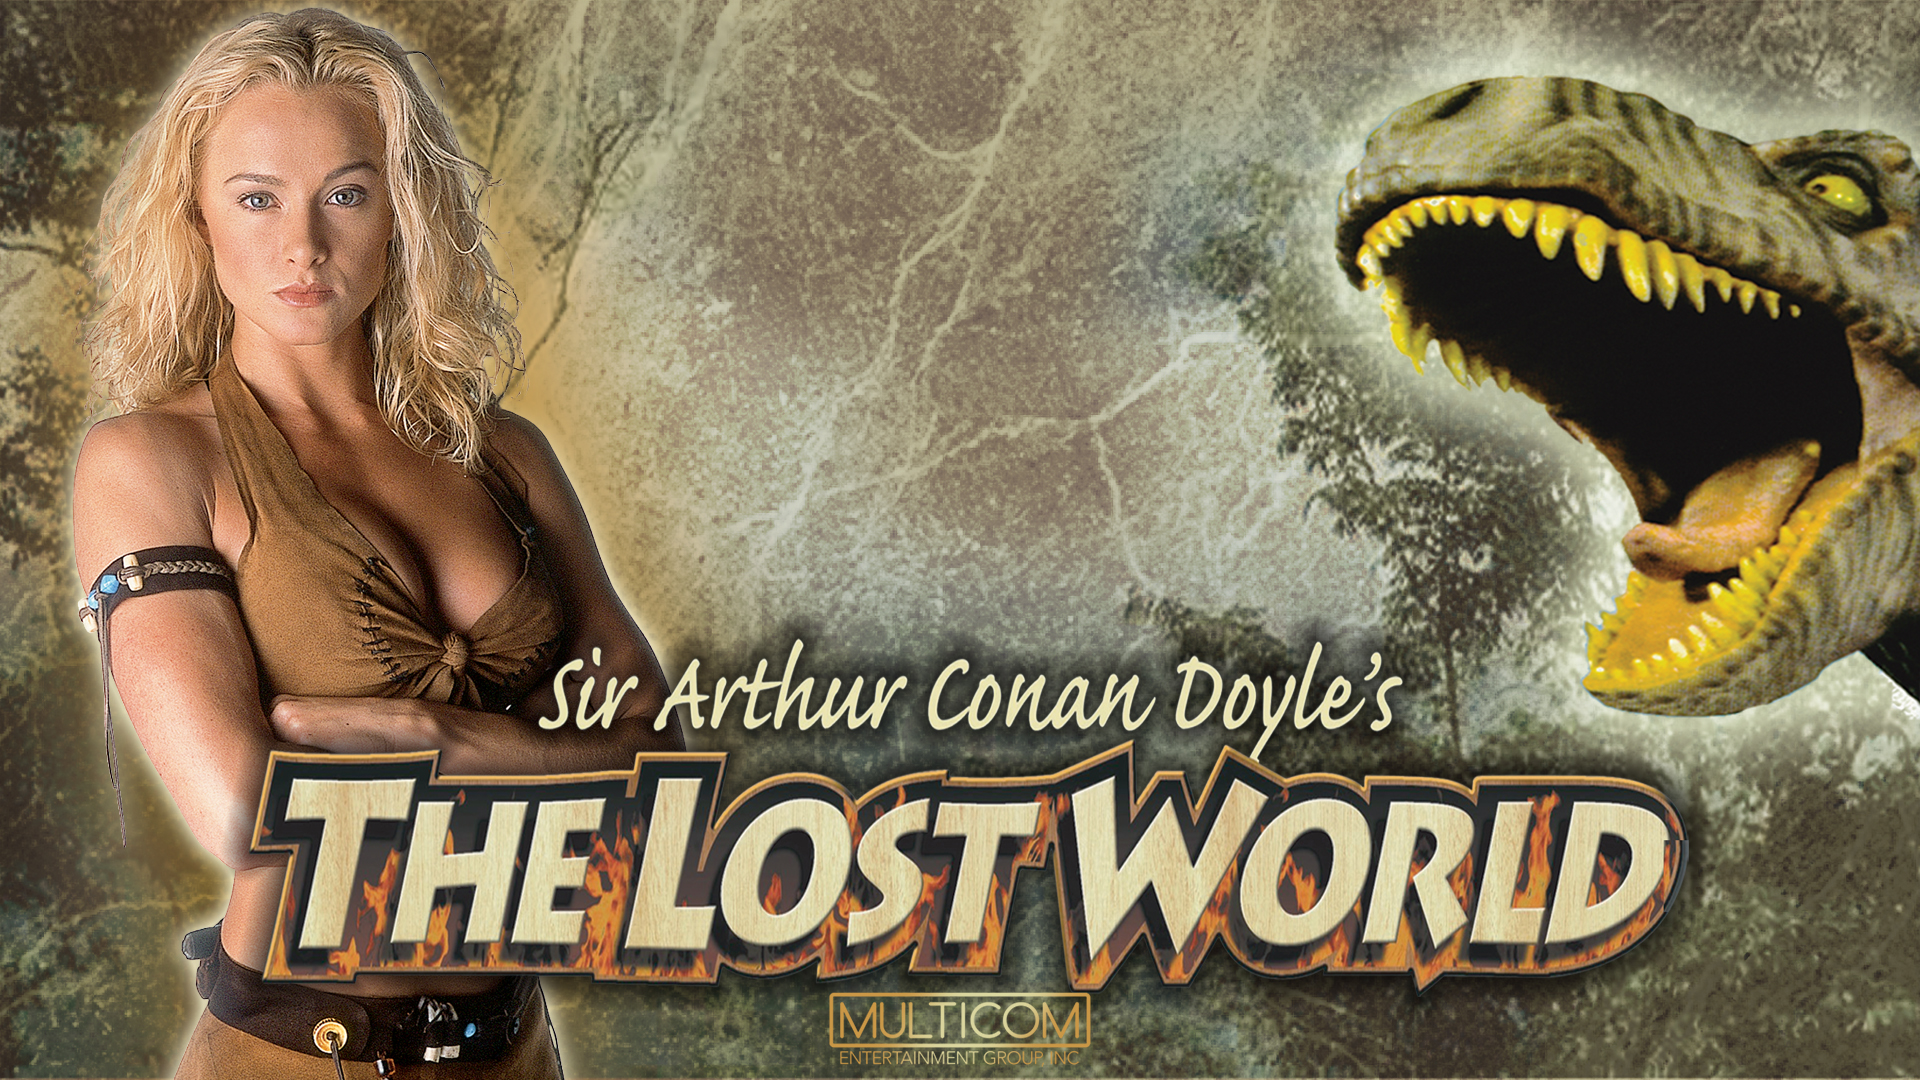 Lost world 3. Затерянный мир 2. Затерянный мир Конан Дойл обложка.